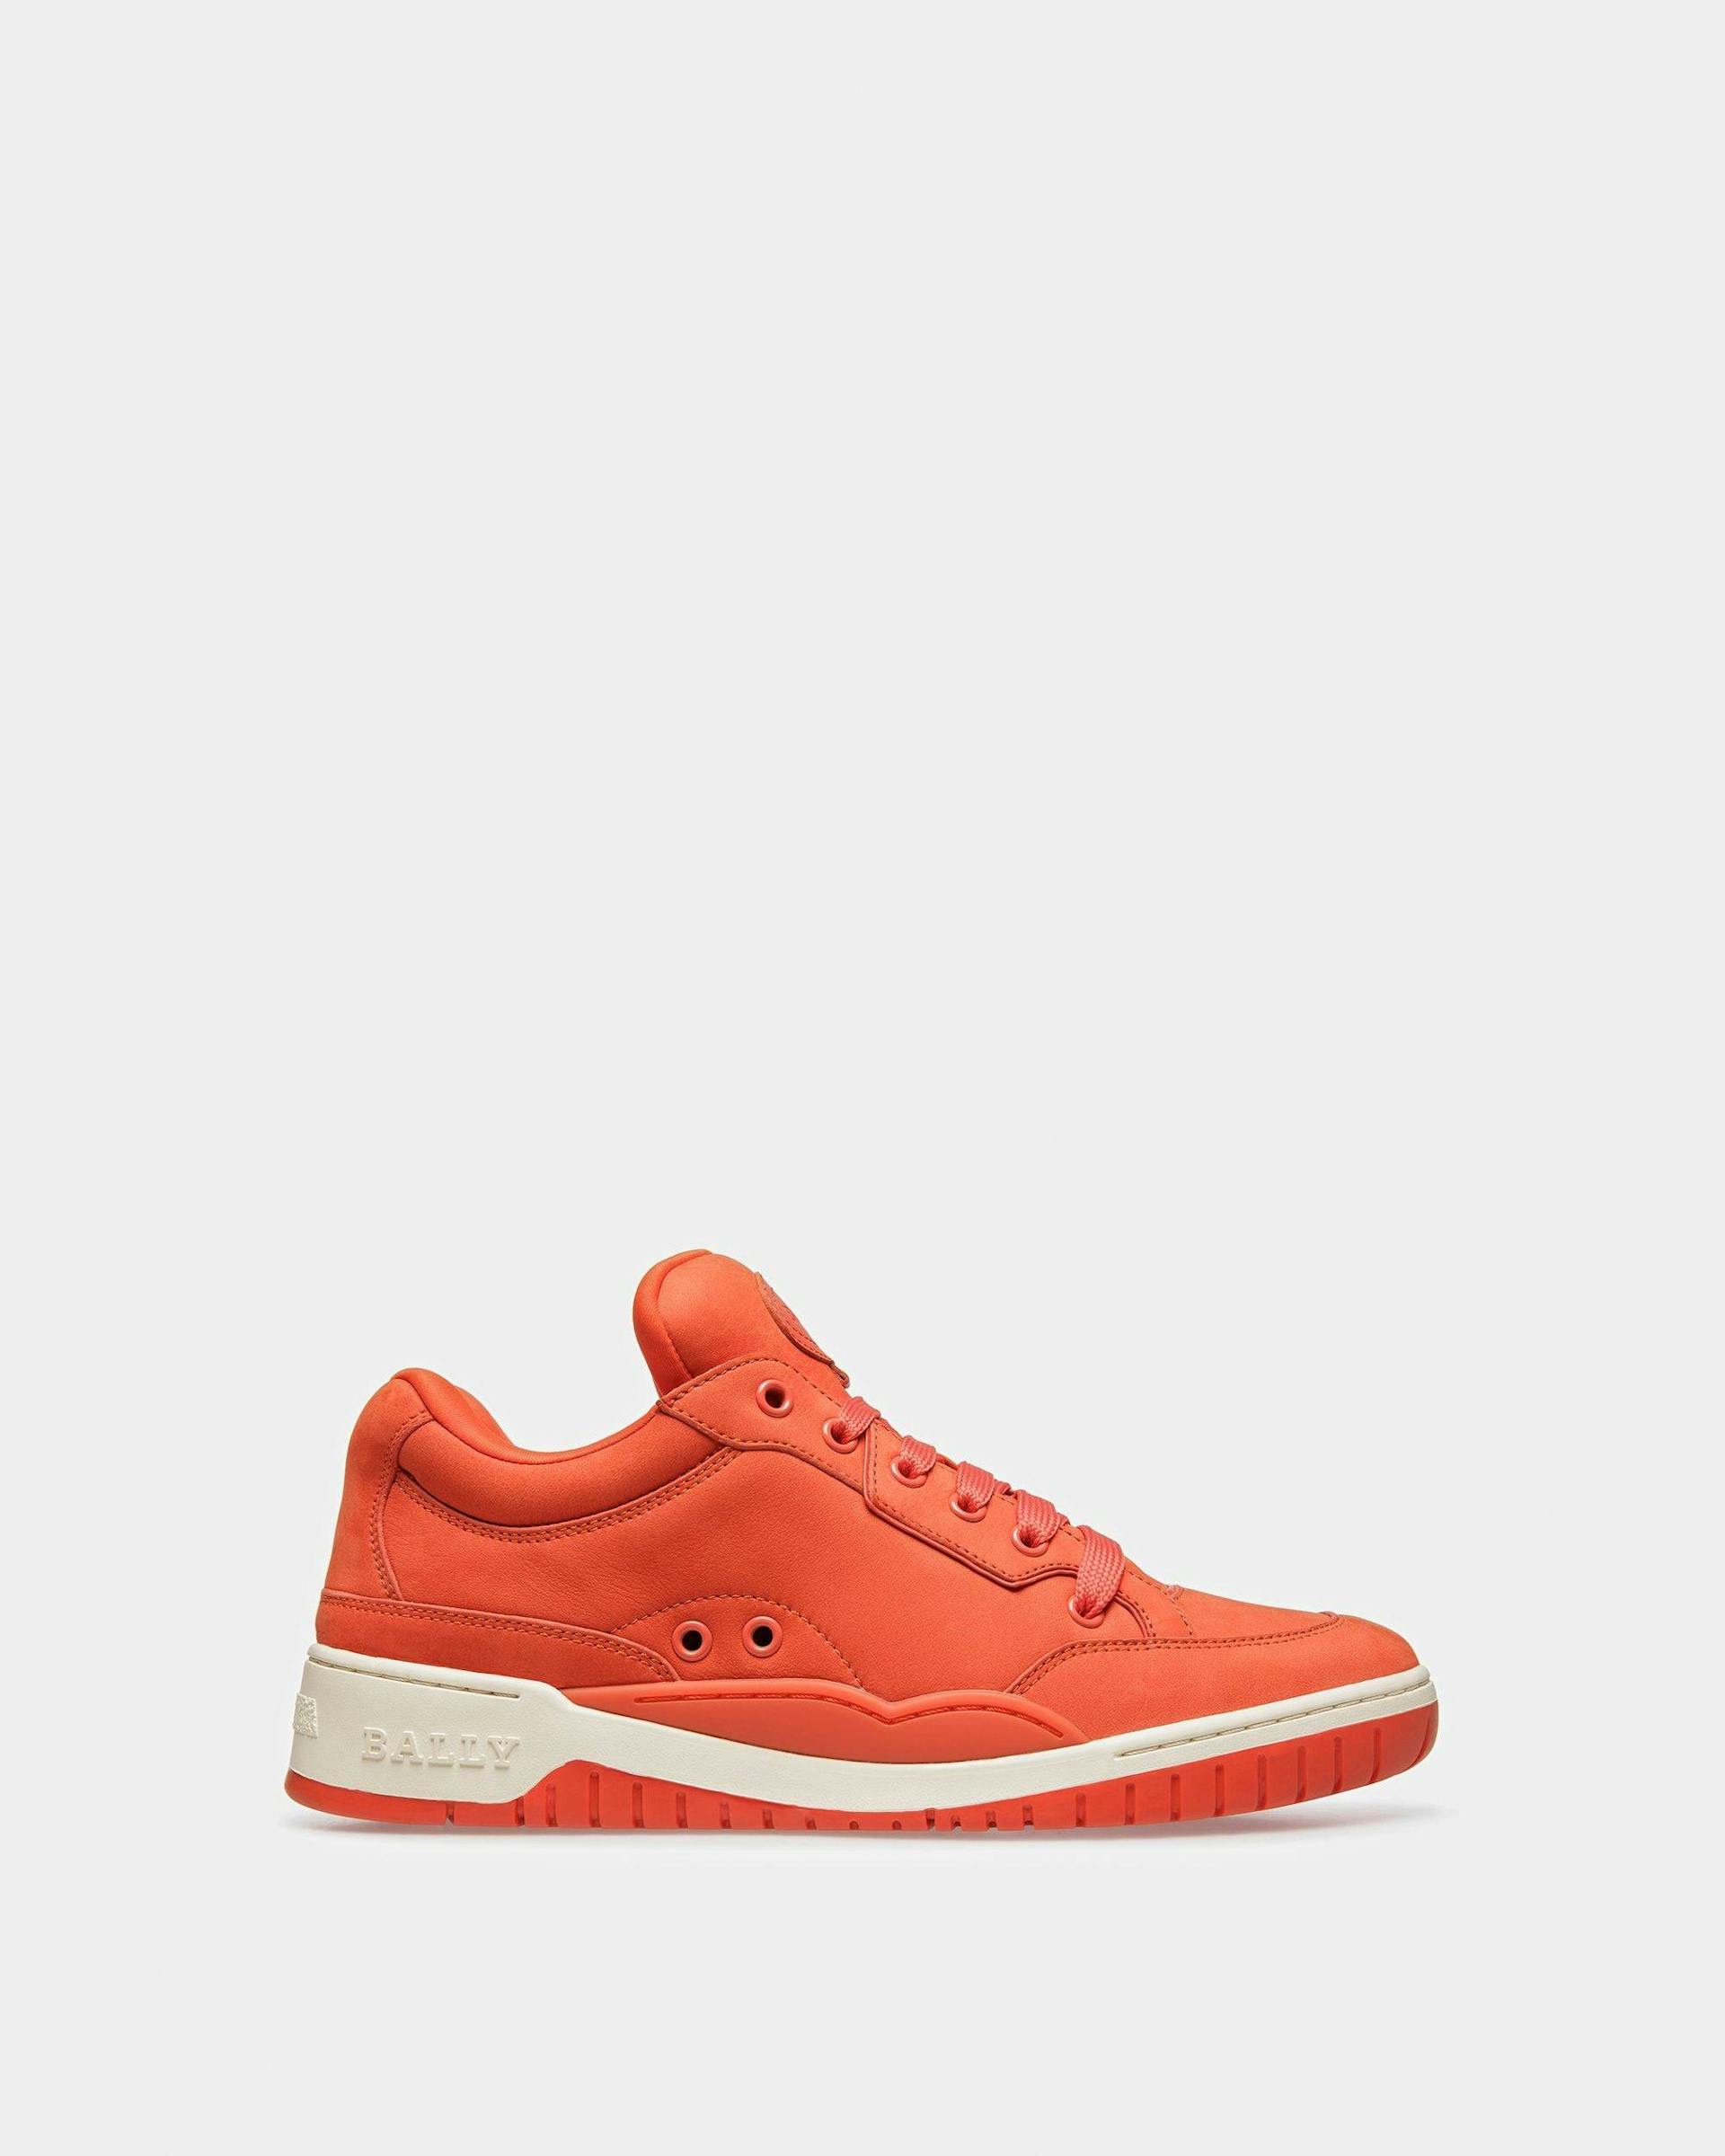 Kiro Leather Sneakers In Orange - Men's - Bally - 01